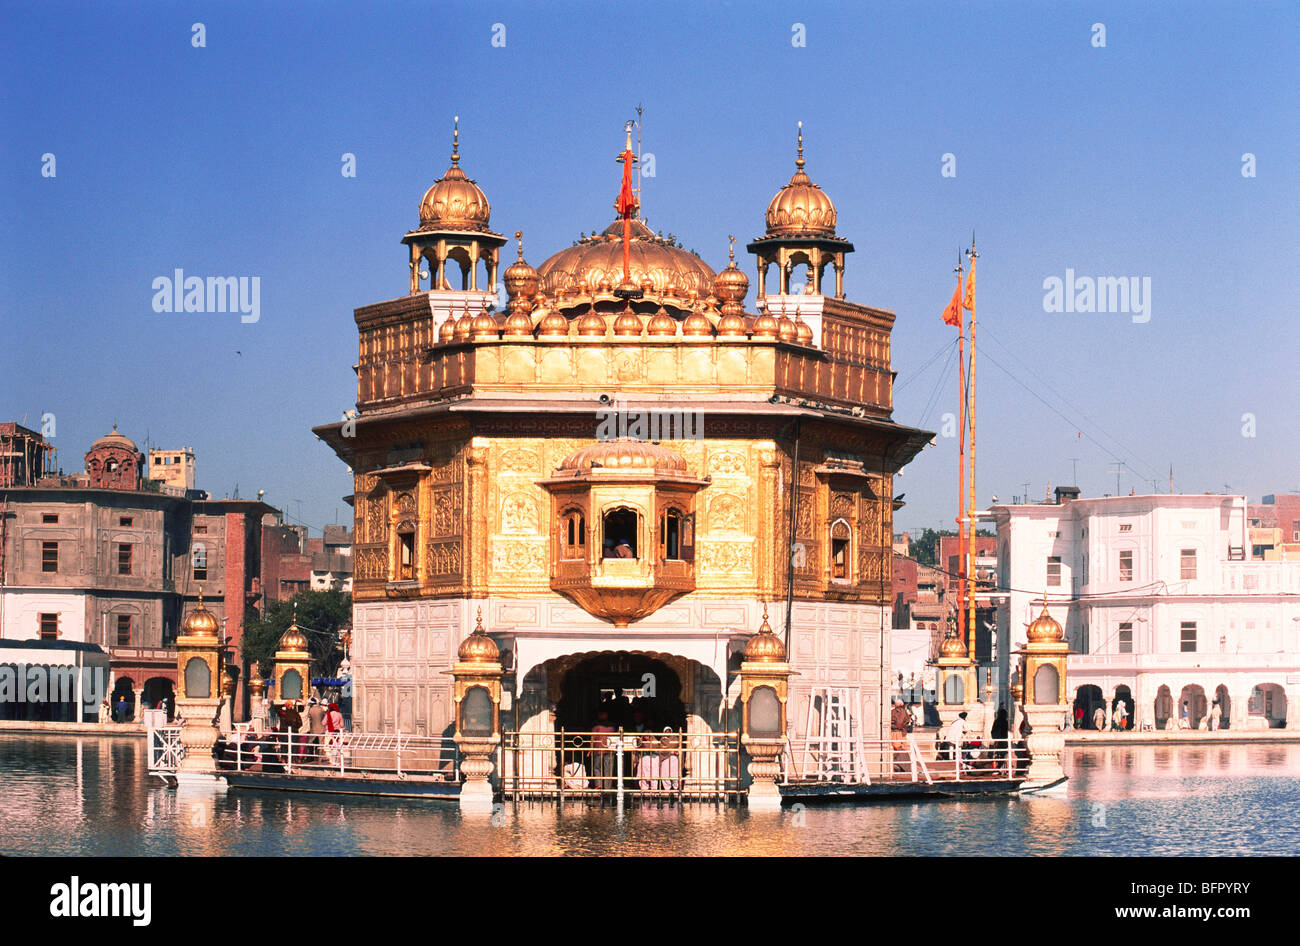 NMK 66891 : Golden temple ; Amritsar ; Punjab ; India Stock Photo - Alamy